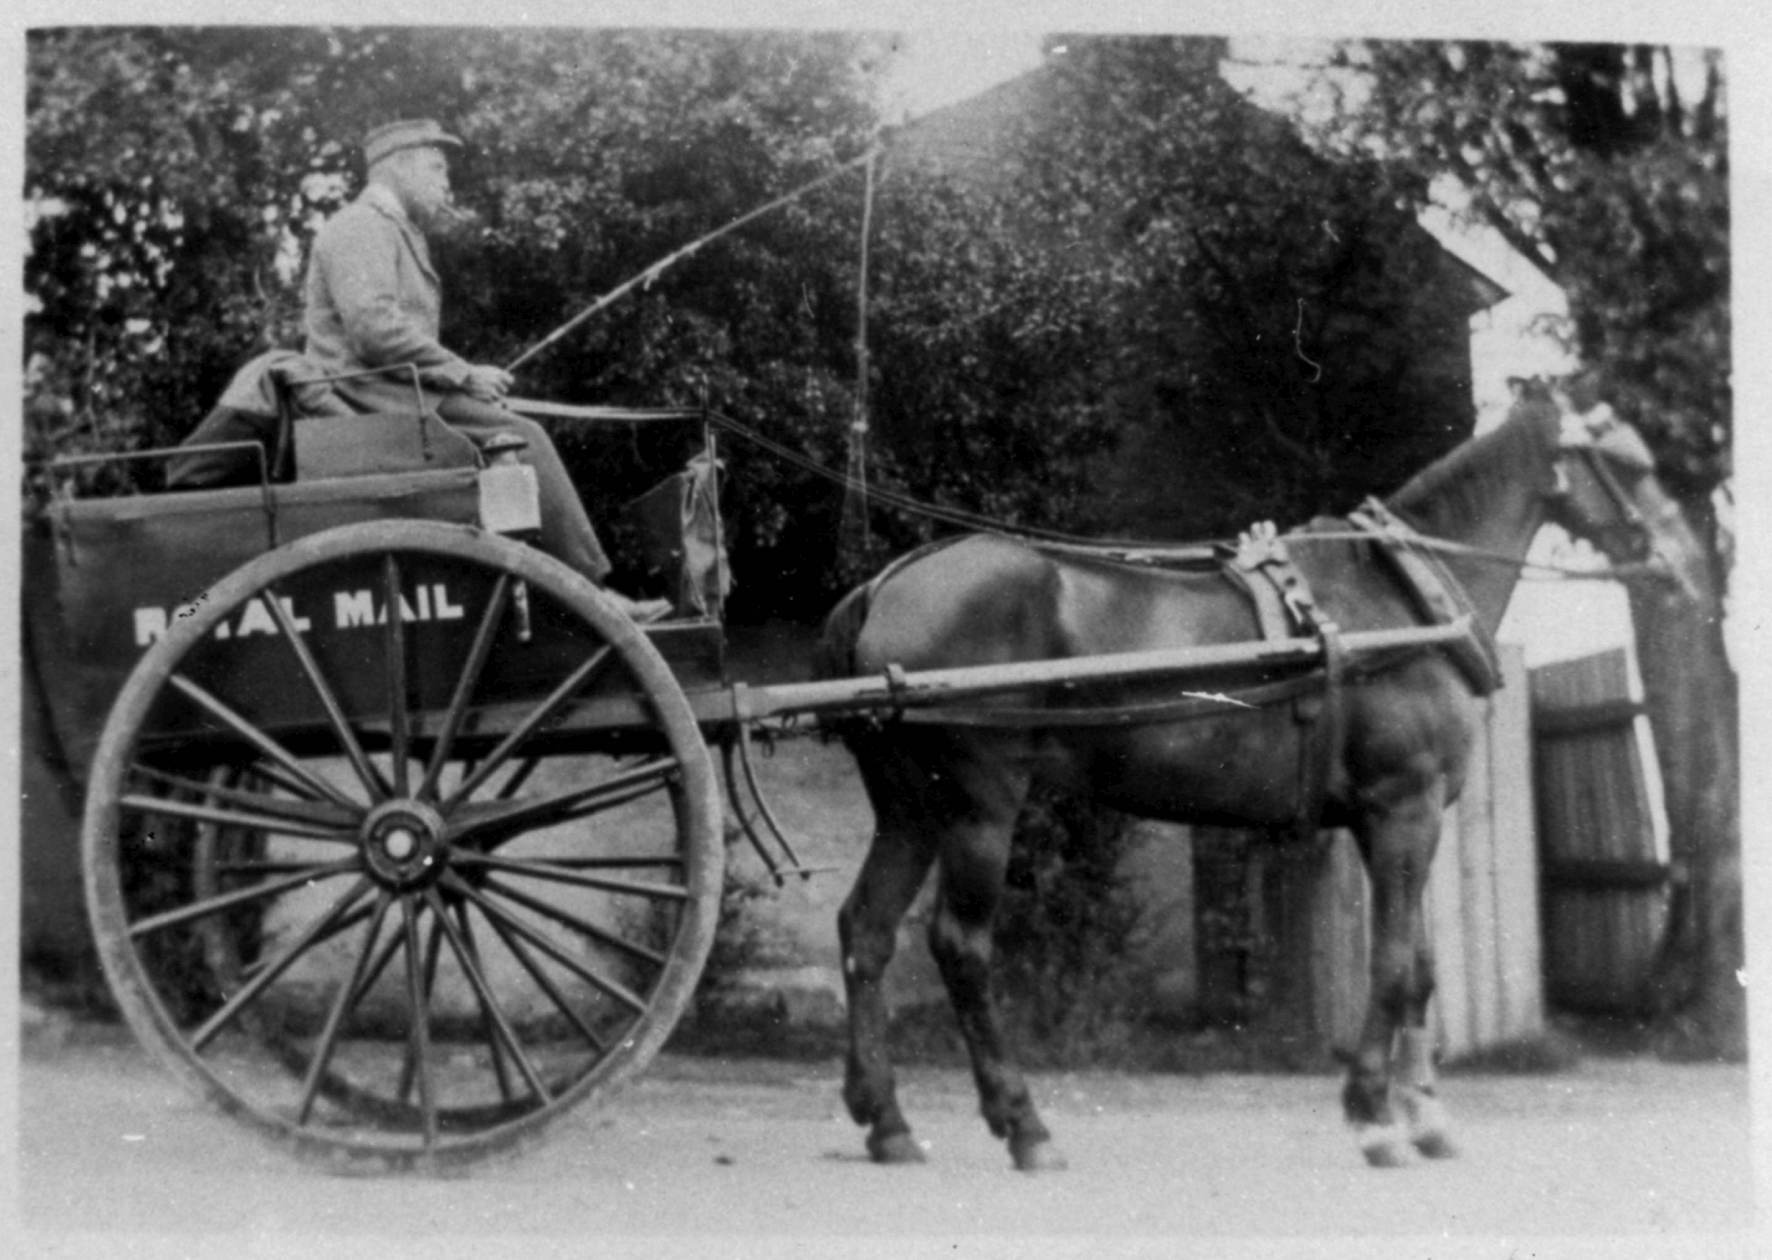 Postman on Royal Mail cart